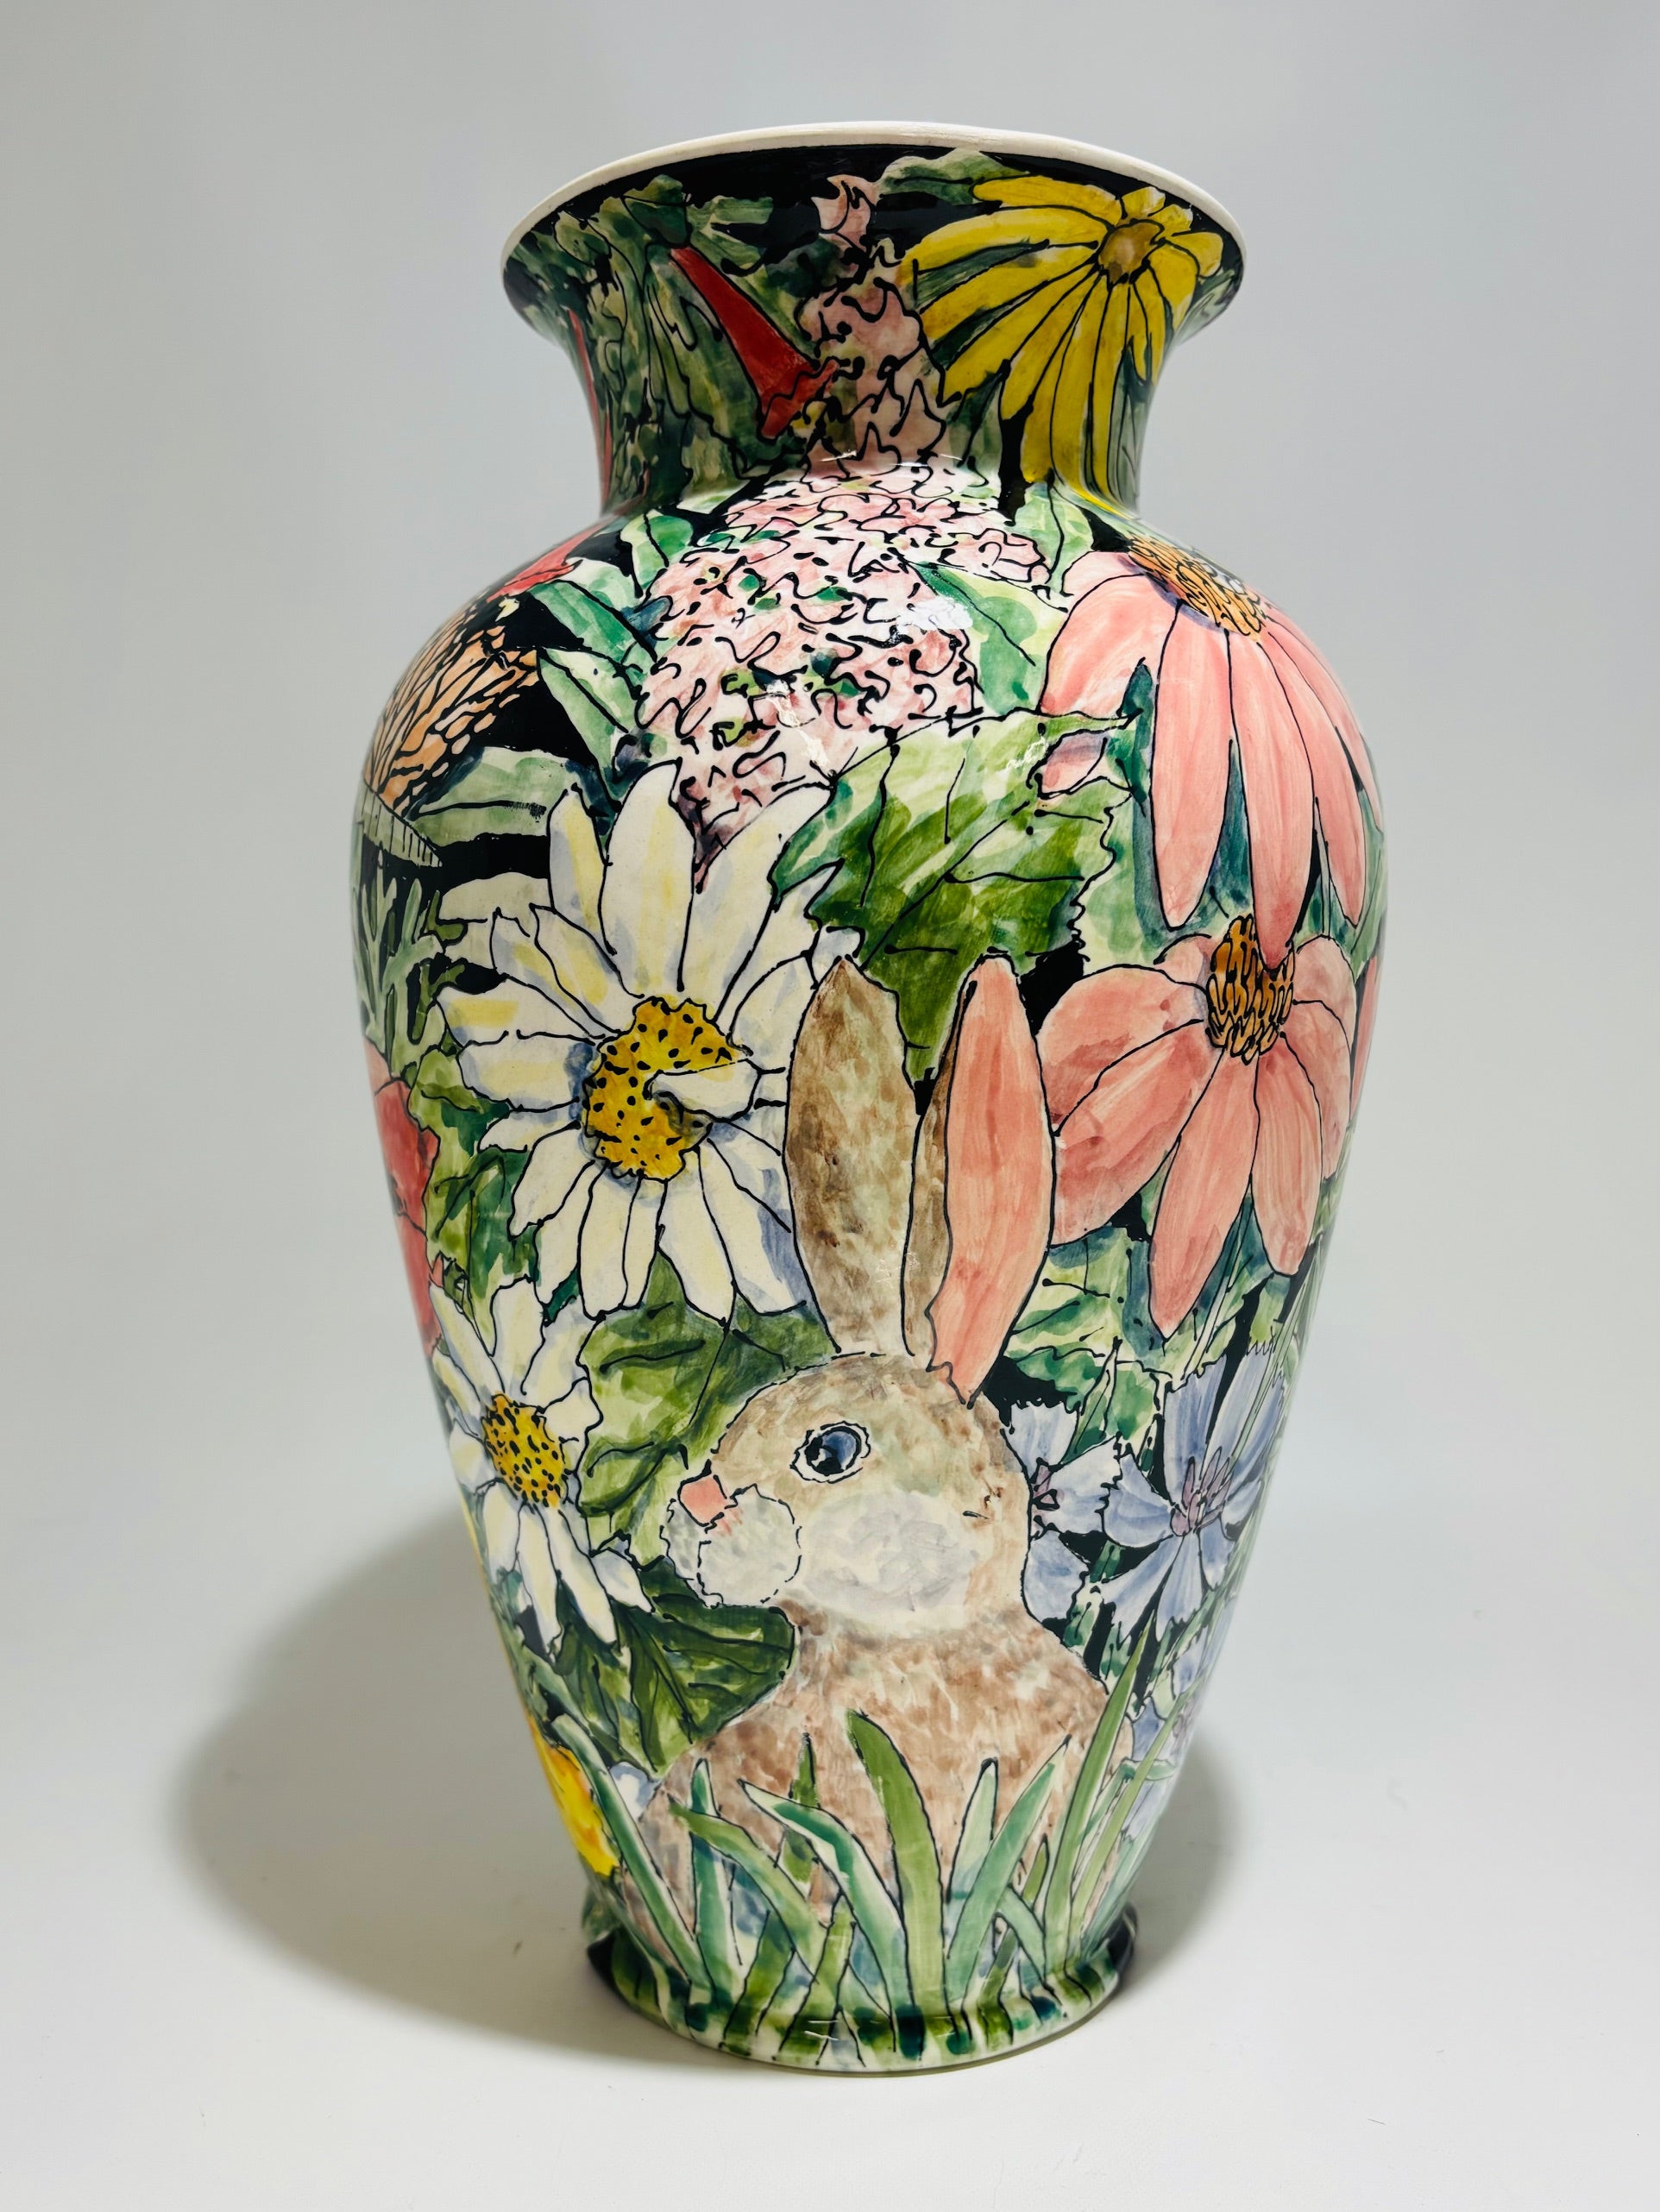 Jan Francoeur Nature Vase Rabbit🎨 Jan's Celebration Pottery🎨 Buy Art at Carolina Creations Gallery in Downtown New Bern🎨